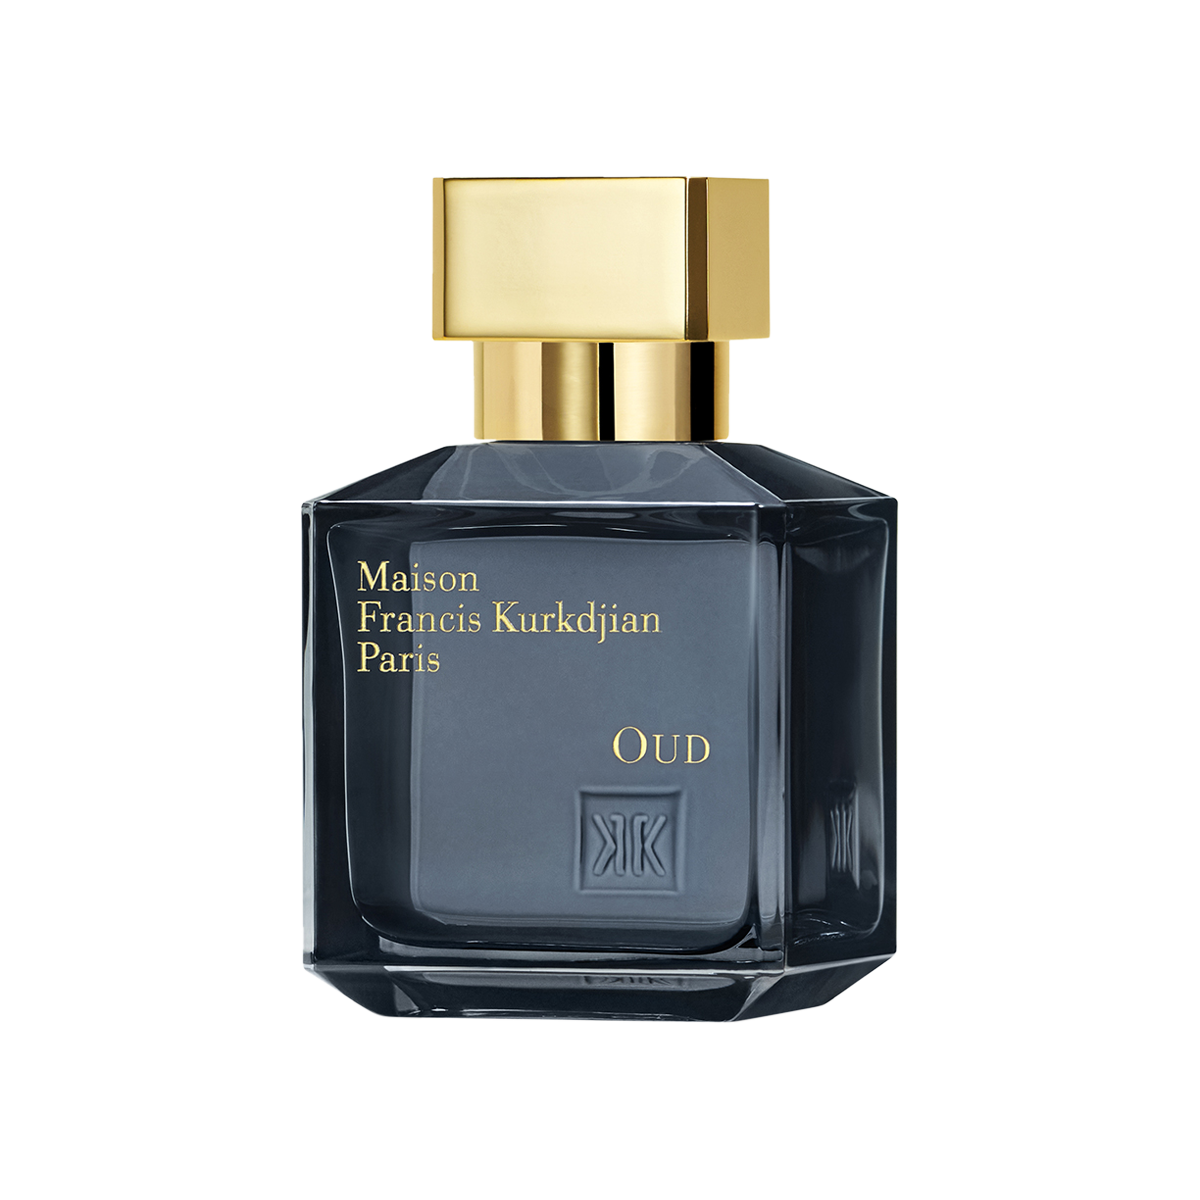 Maison Francis Kurkdjian - Oud Eau de Parfum